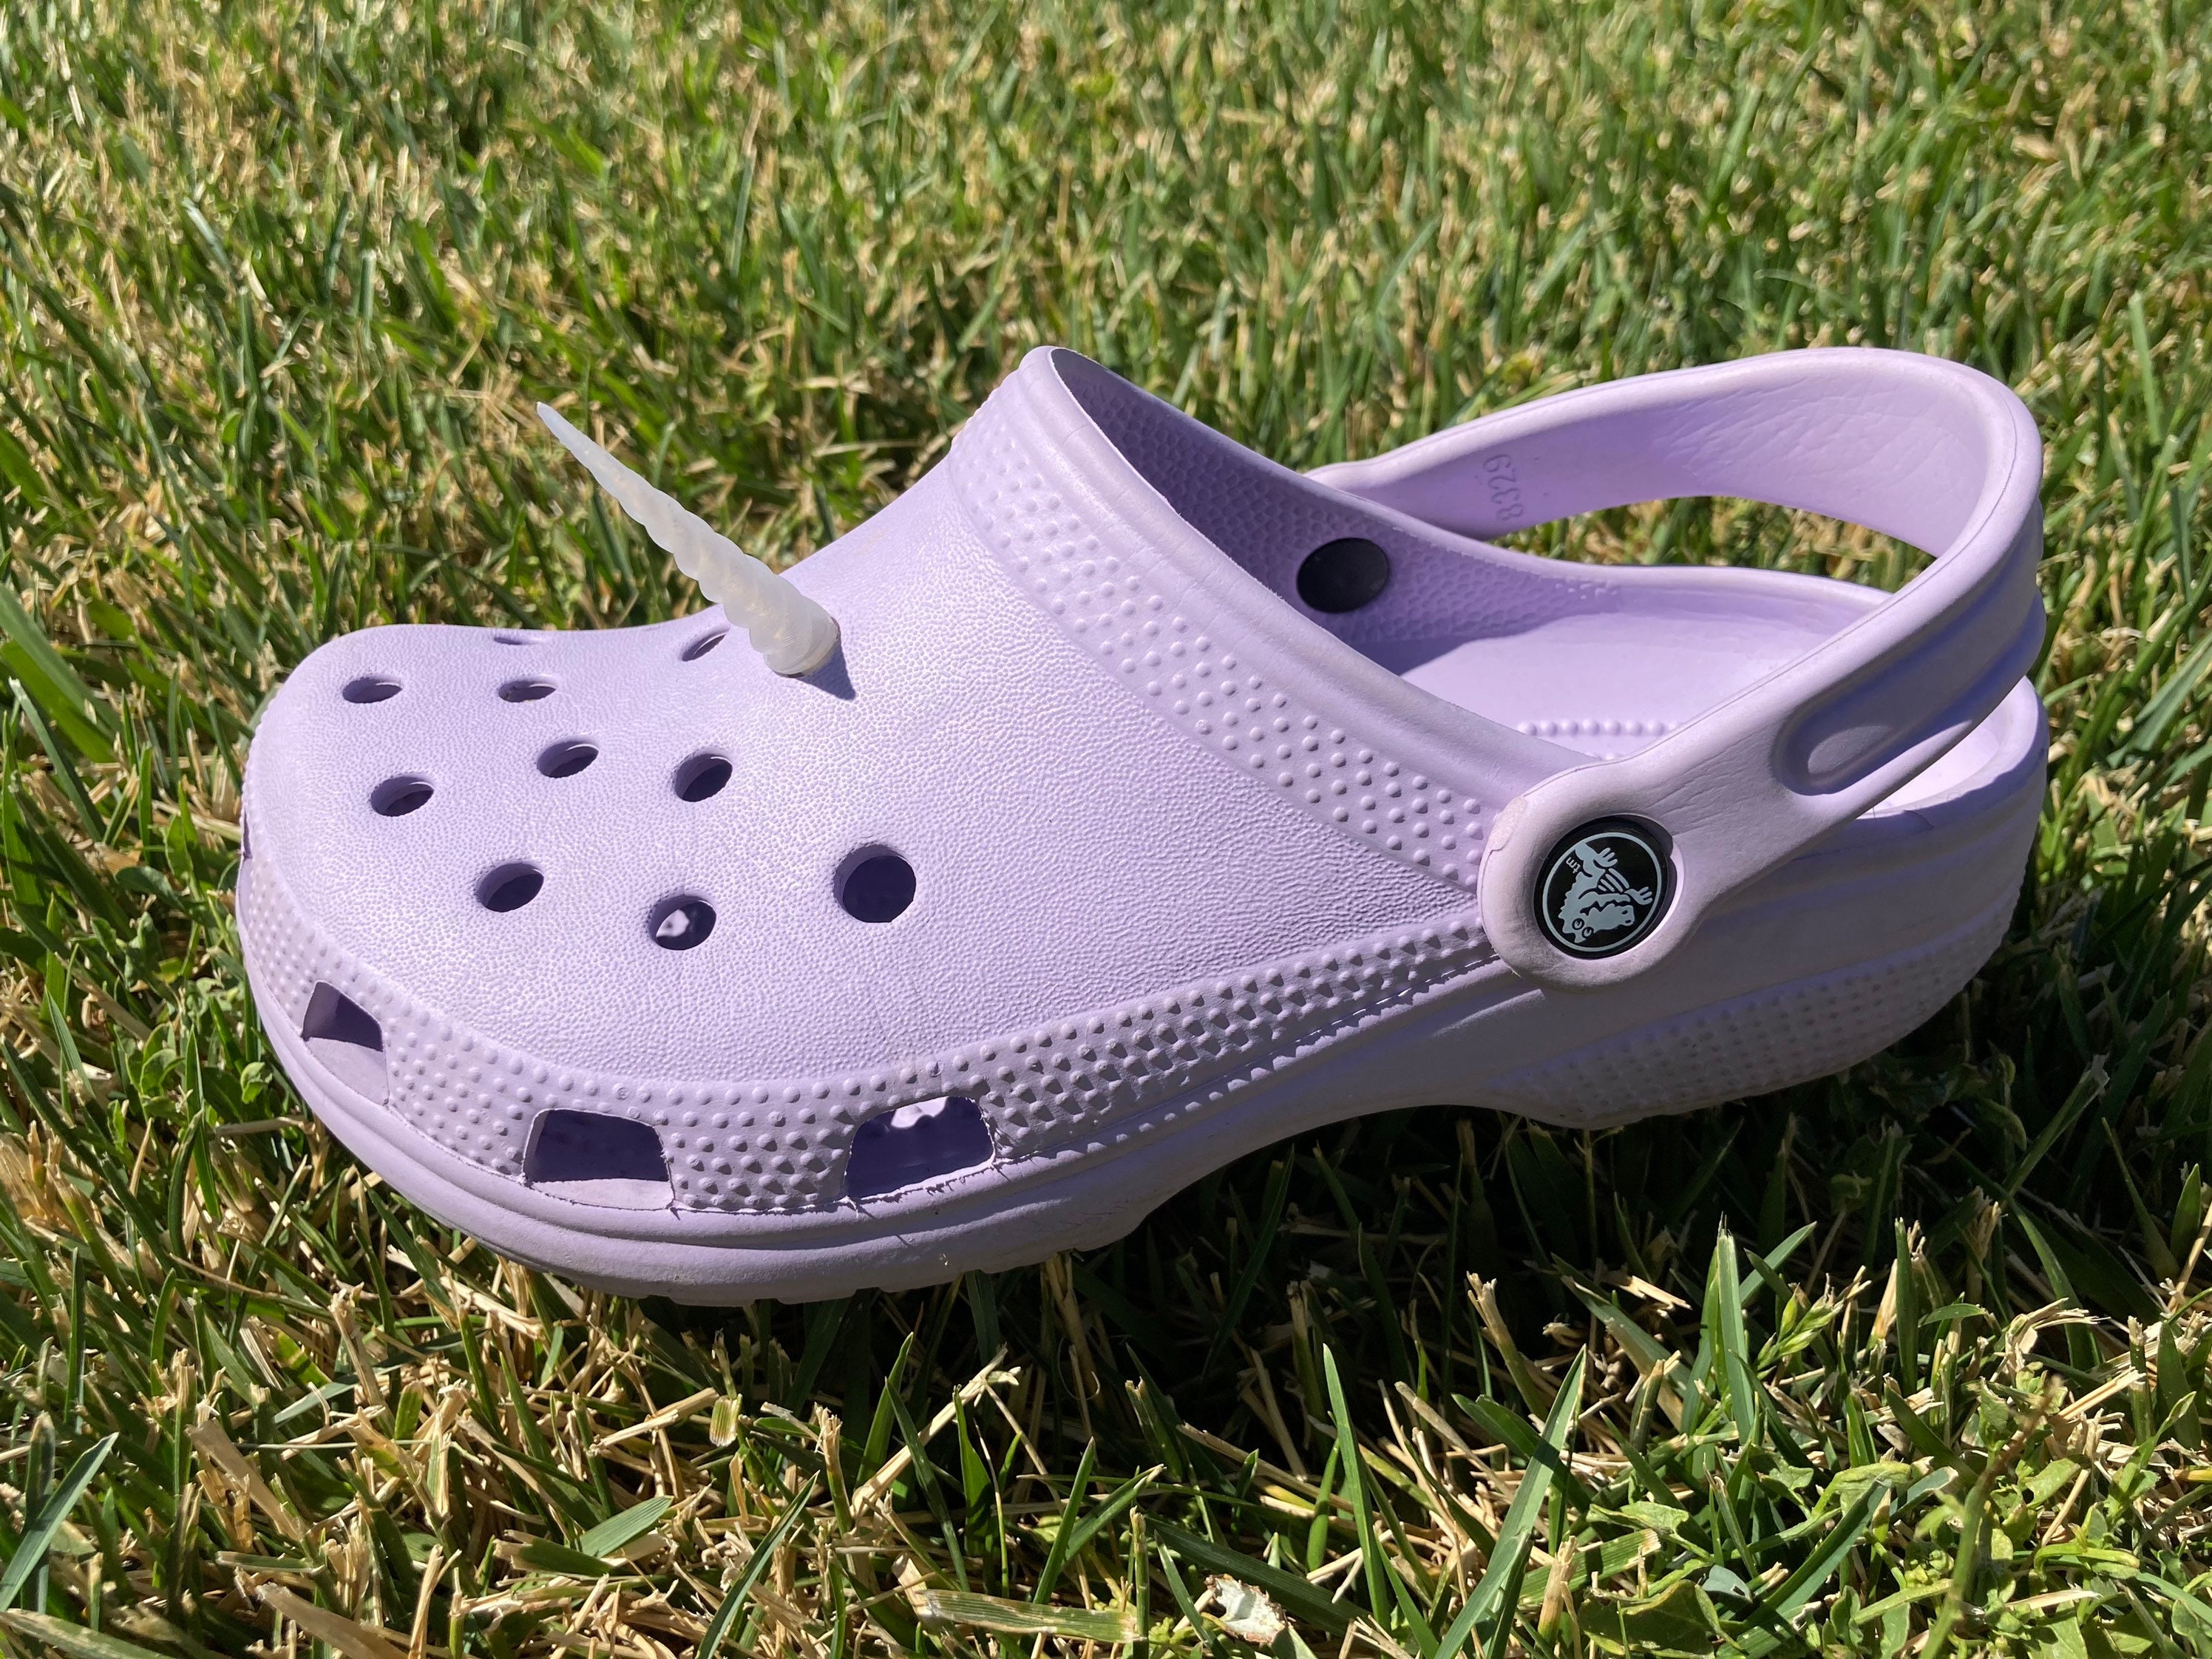 Contender for sneaker of the year, the Shrek Crocs Clog